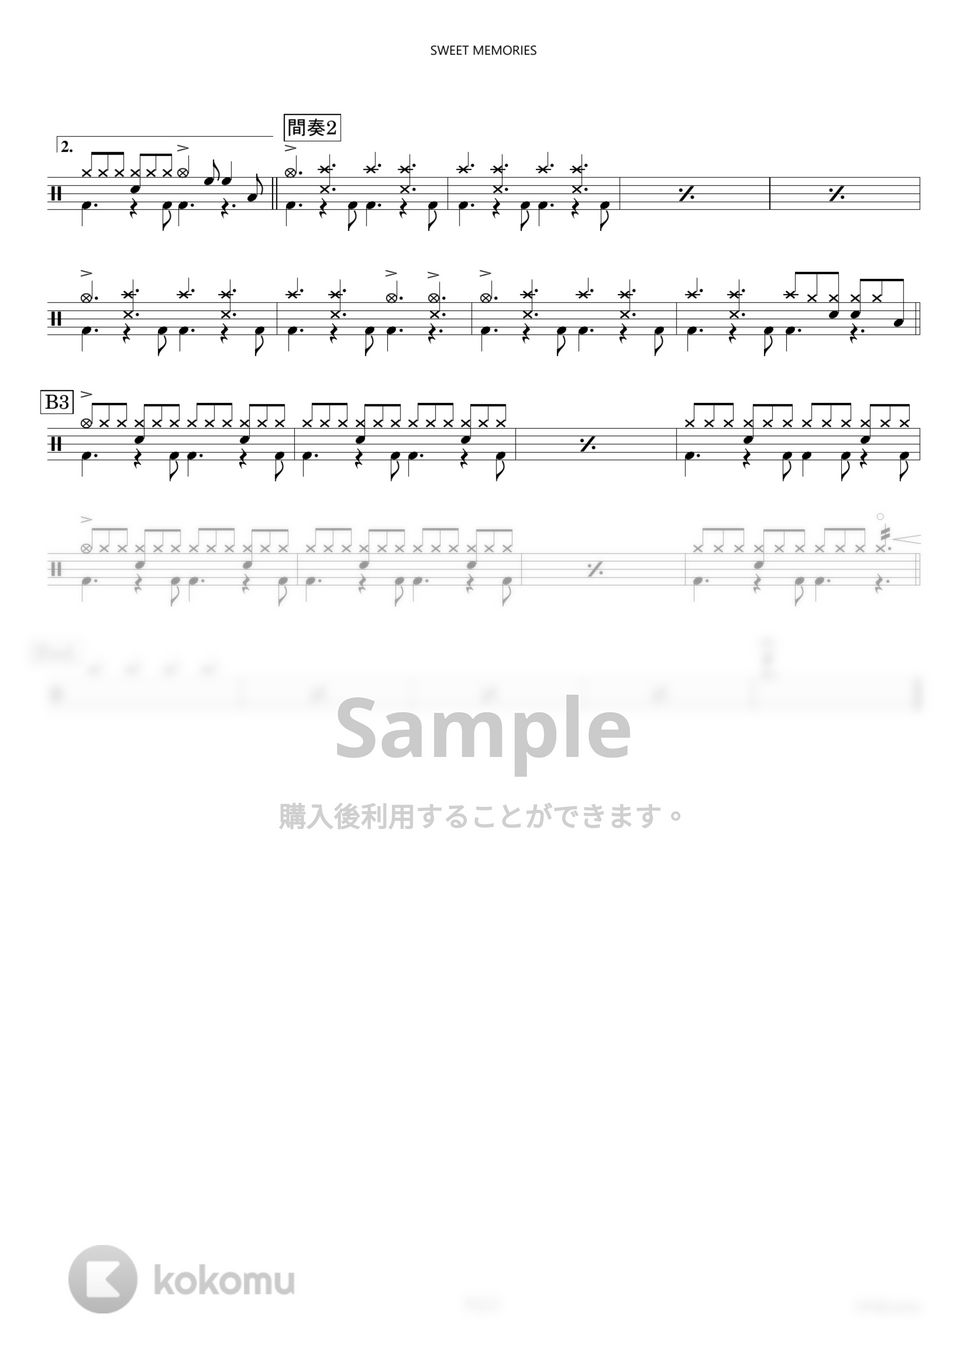 松田聖子 - SWEET MEMORIES〔完コピ〕 by HYdrums